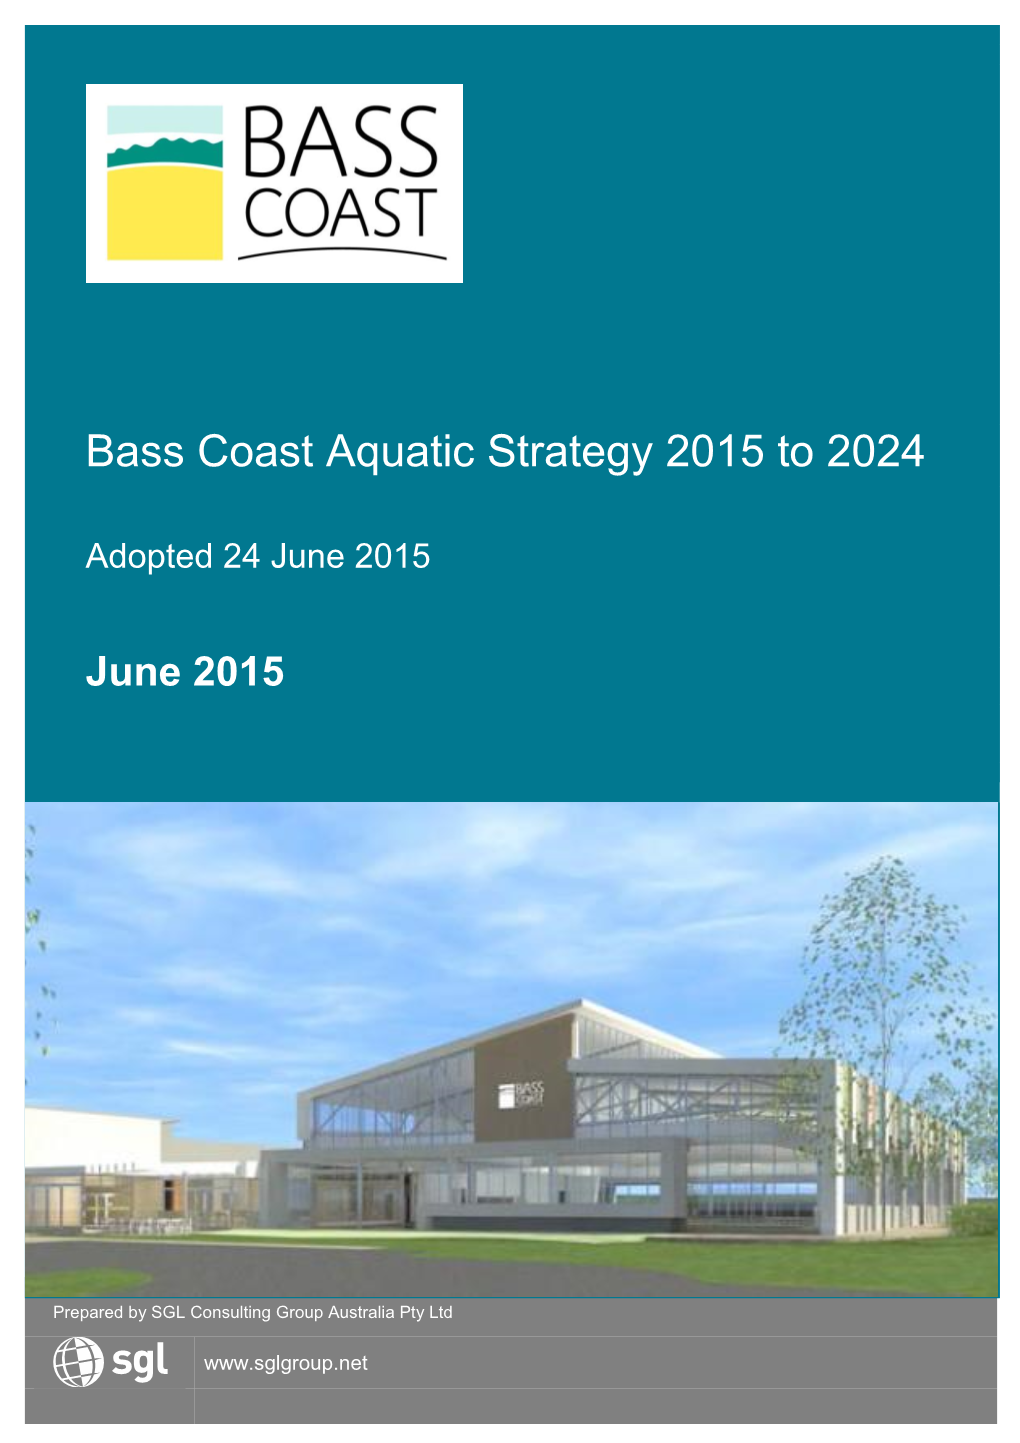 Bass Coast Aquatic Strategy 2015 to 2024